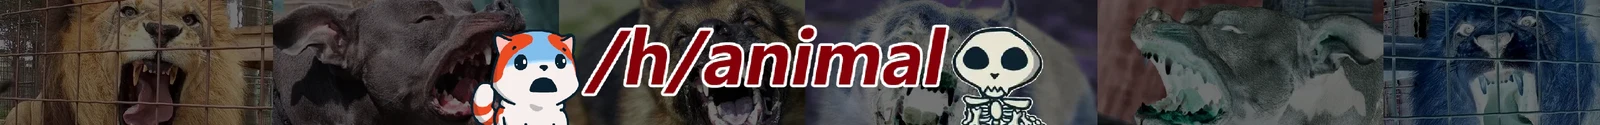 /h/animal banner